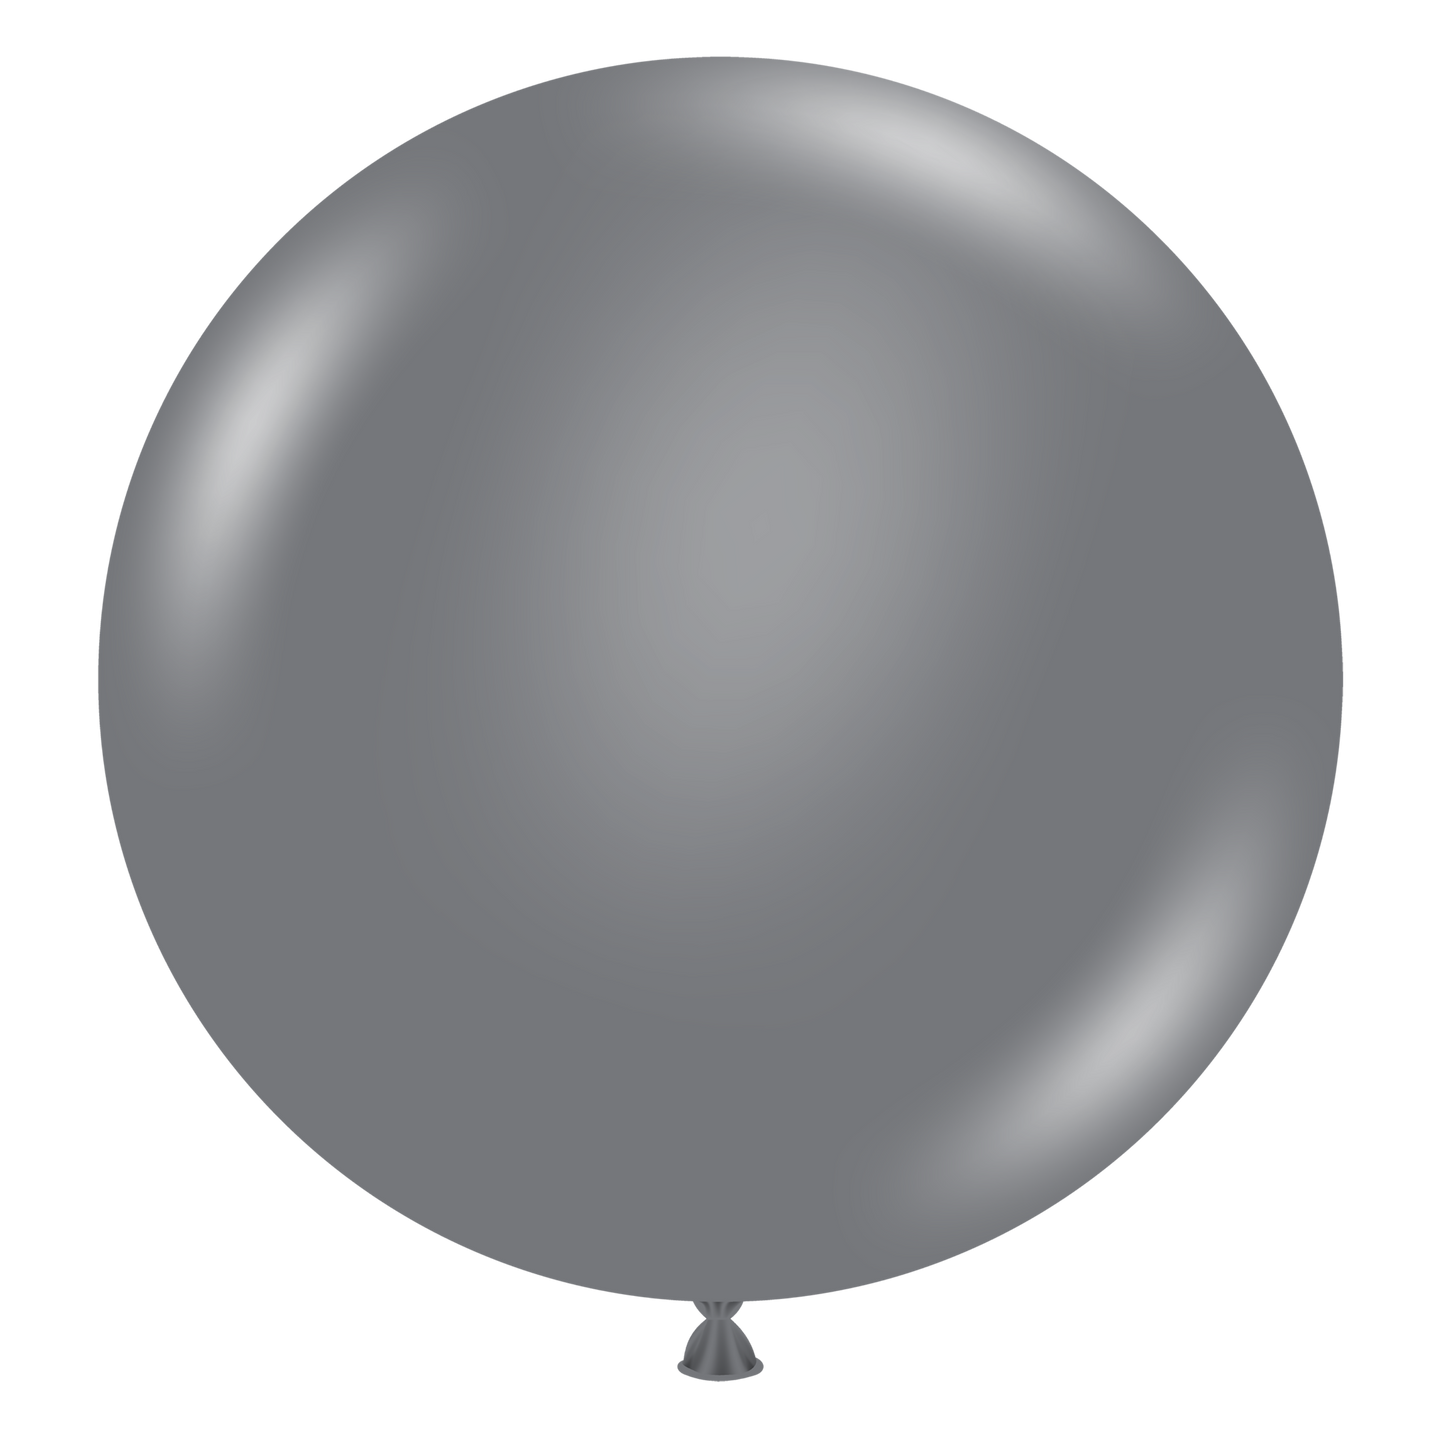 Ballon Large (60 cm)